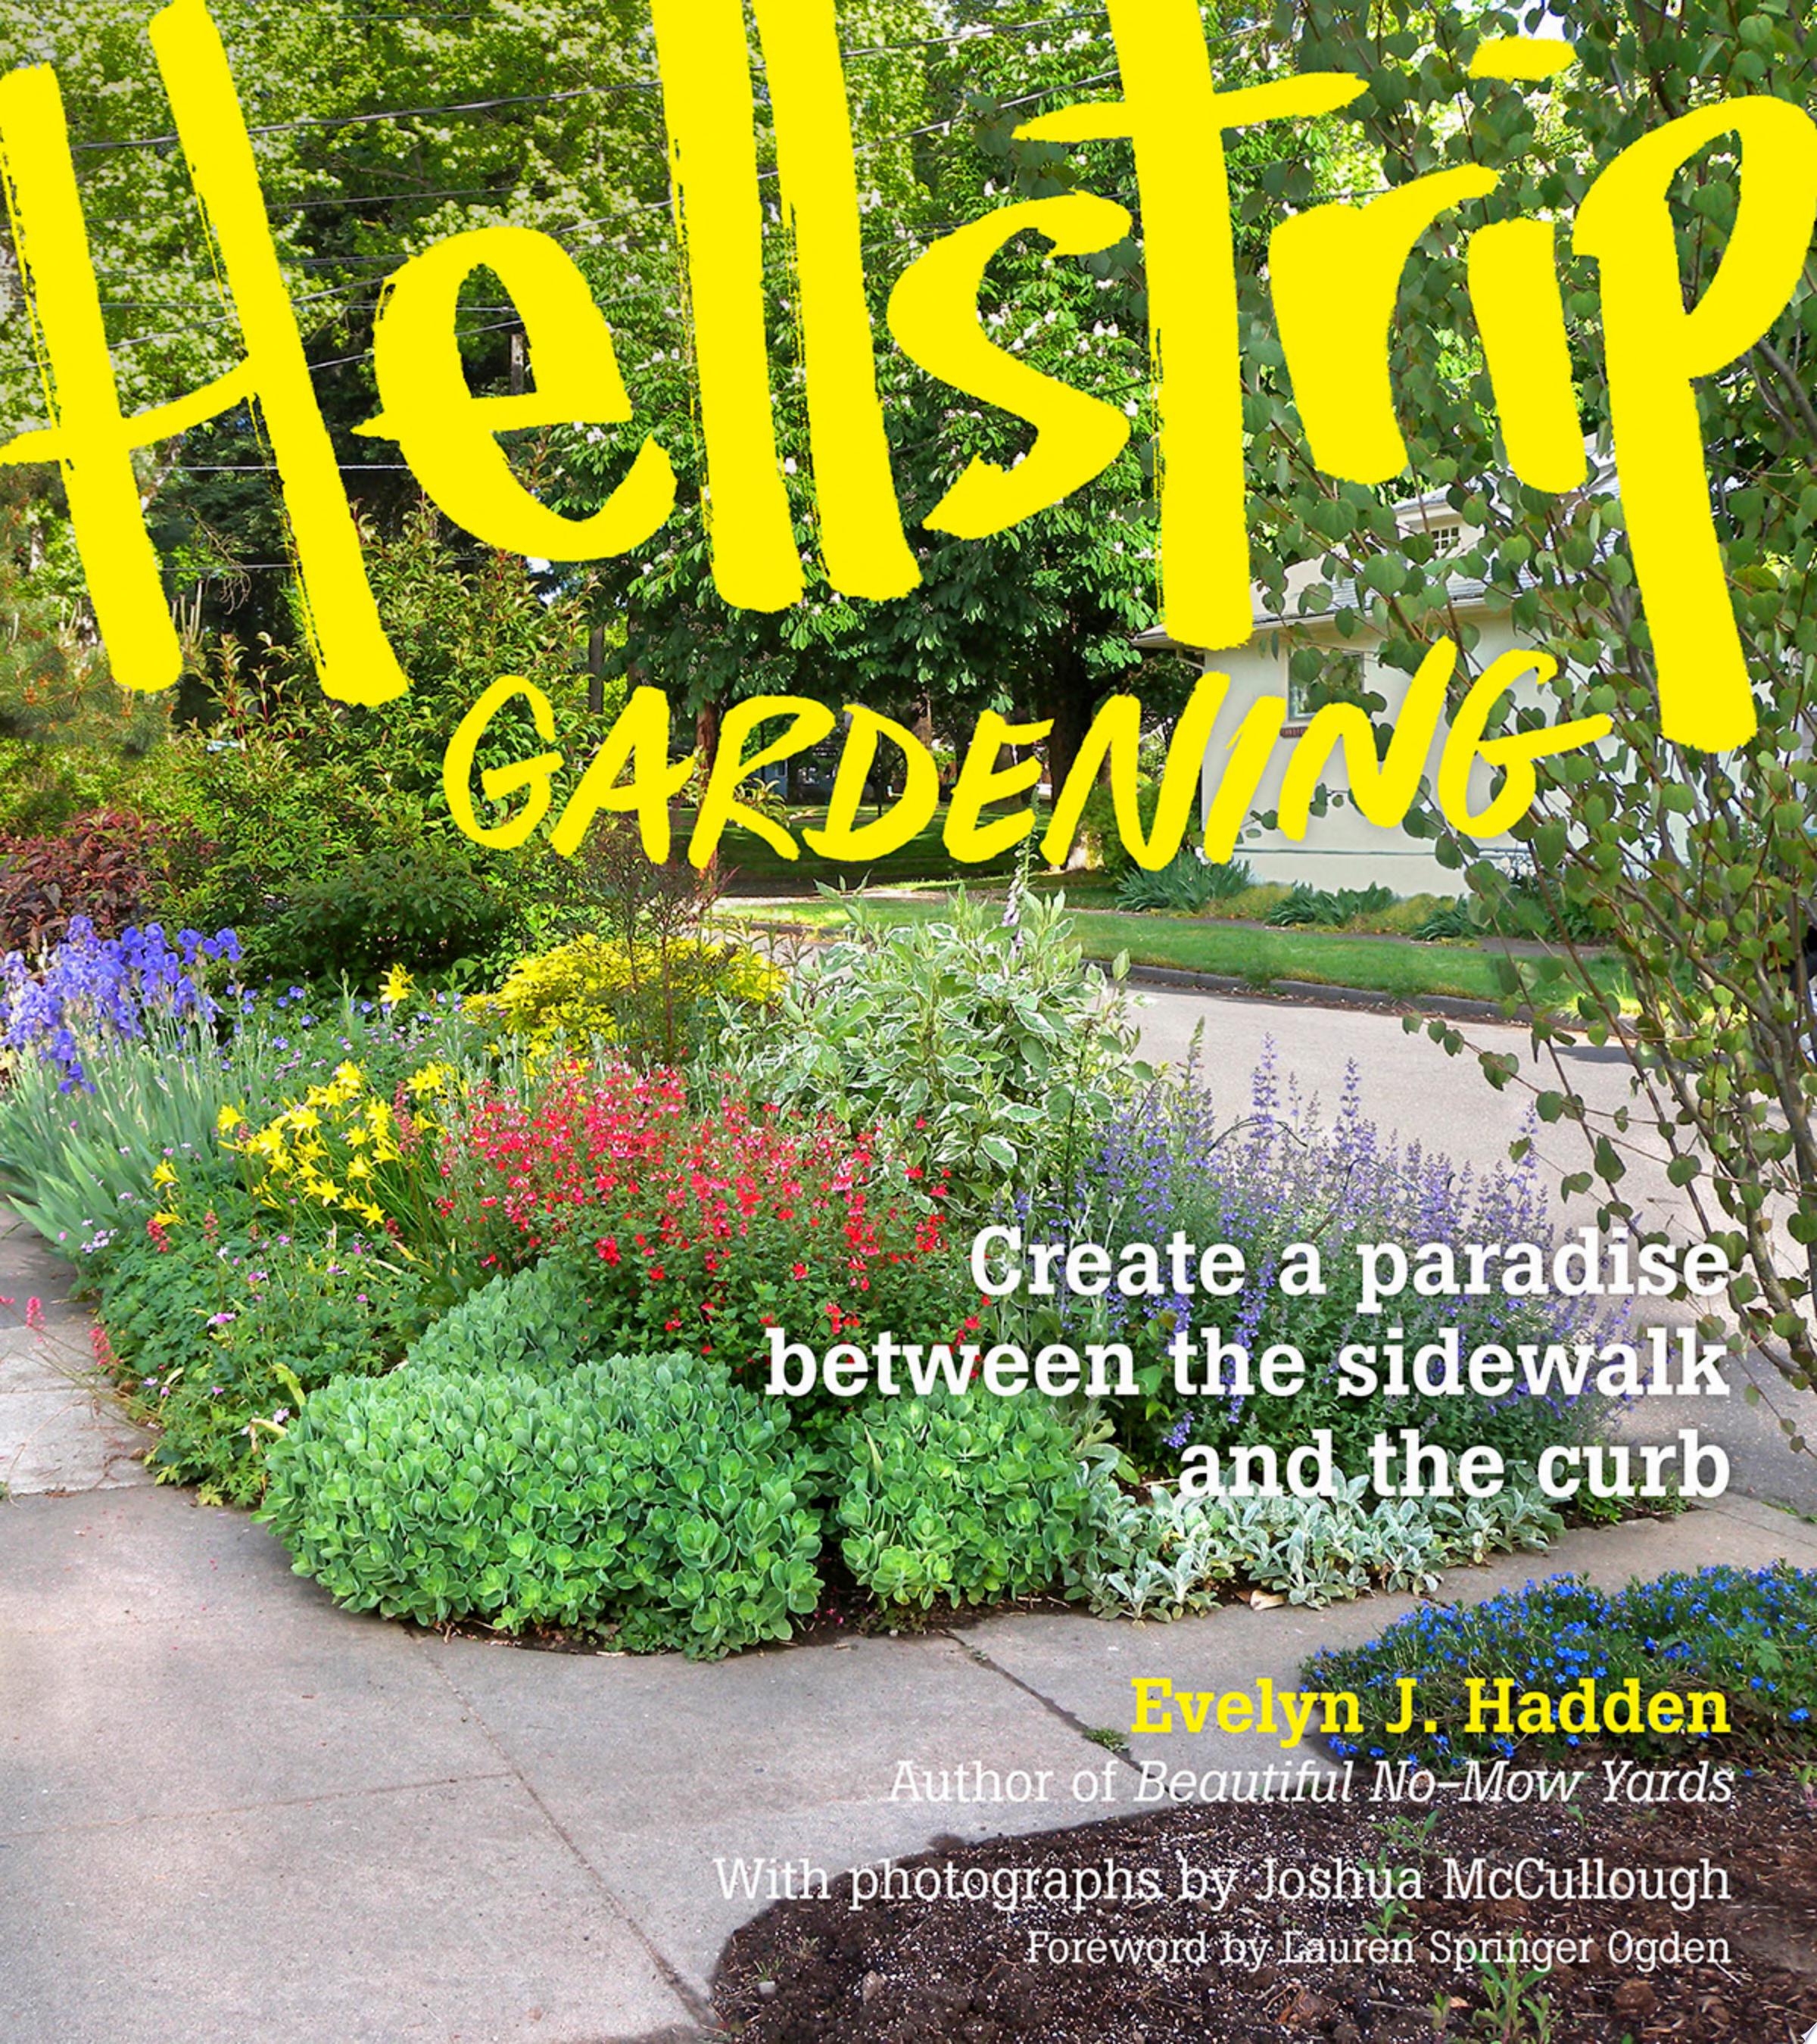 Image for "Hellstrip Gardening"